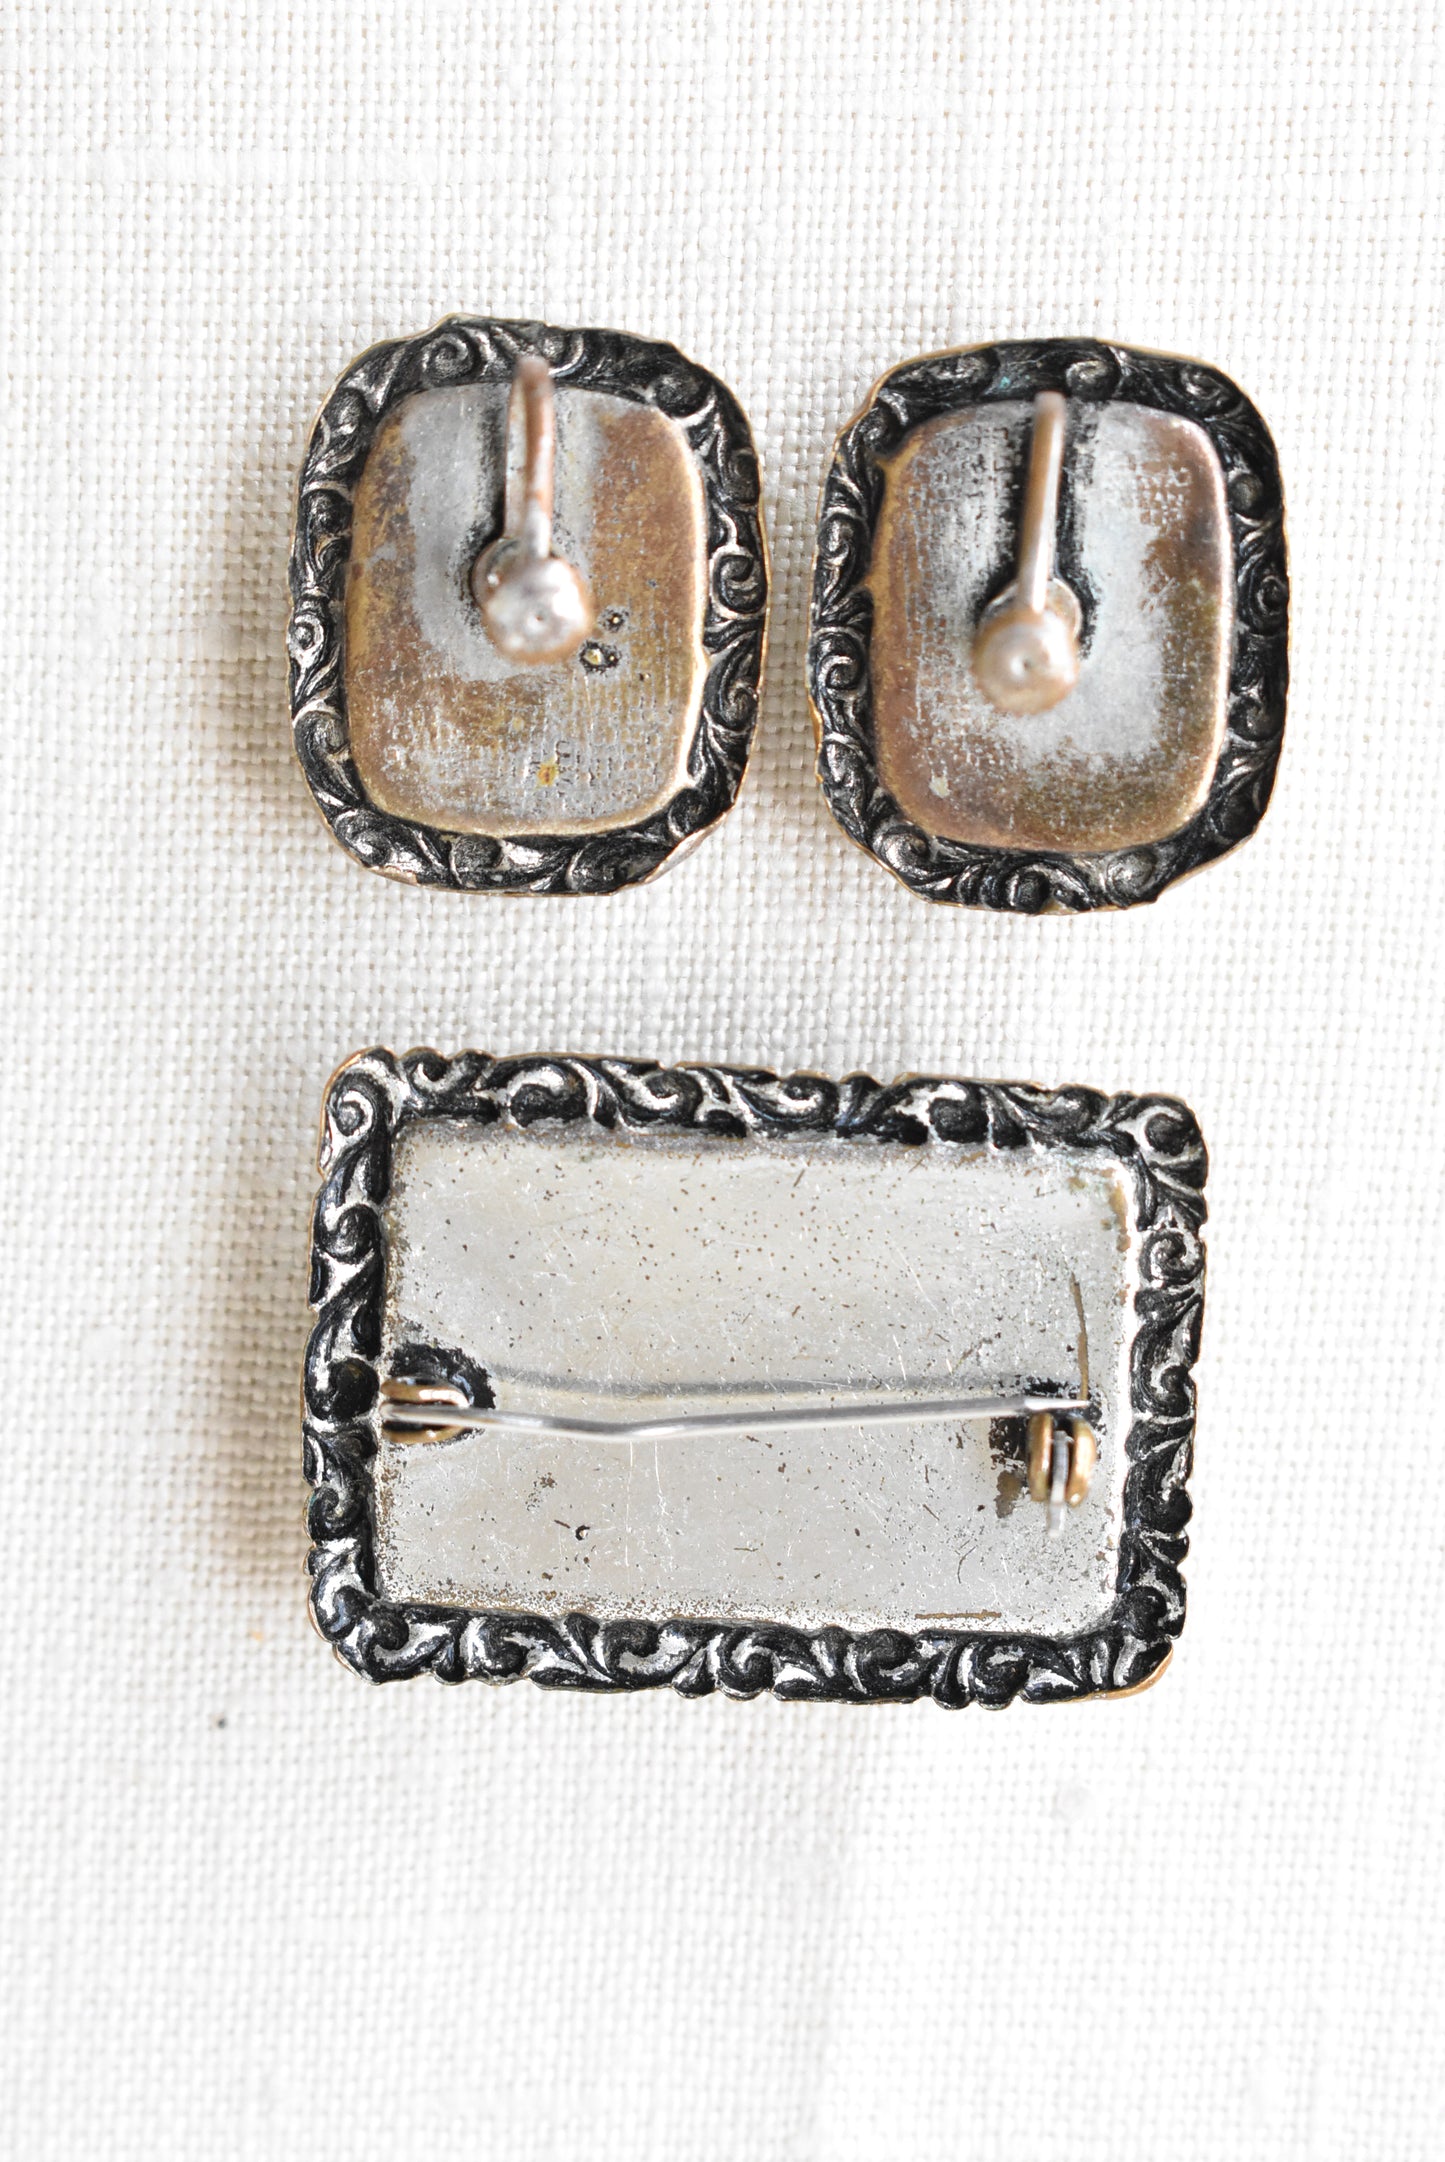 Murano glass earrings and brooch